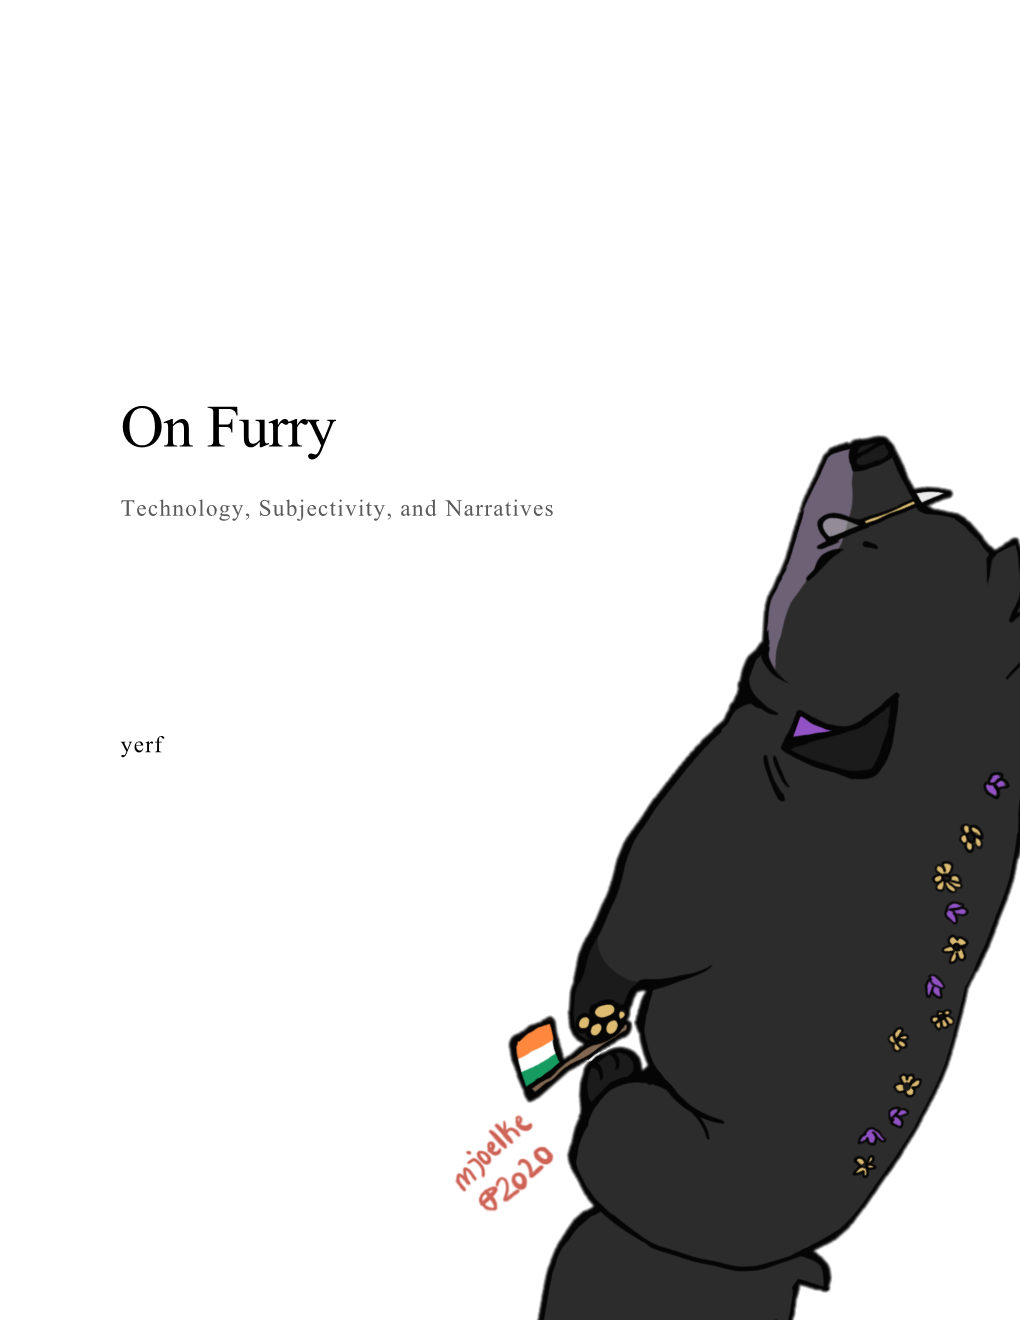 On Furry ~ Yerf